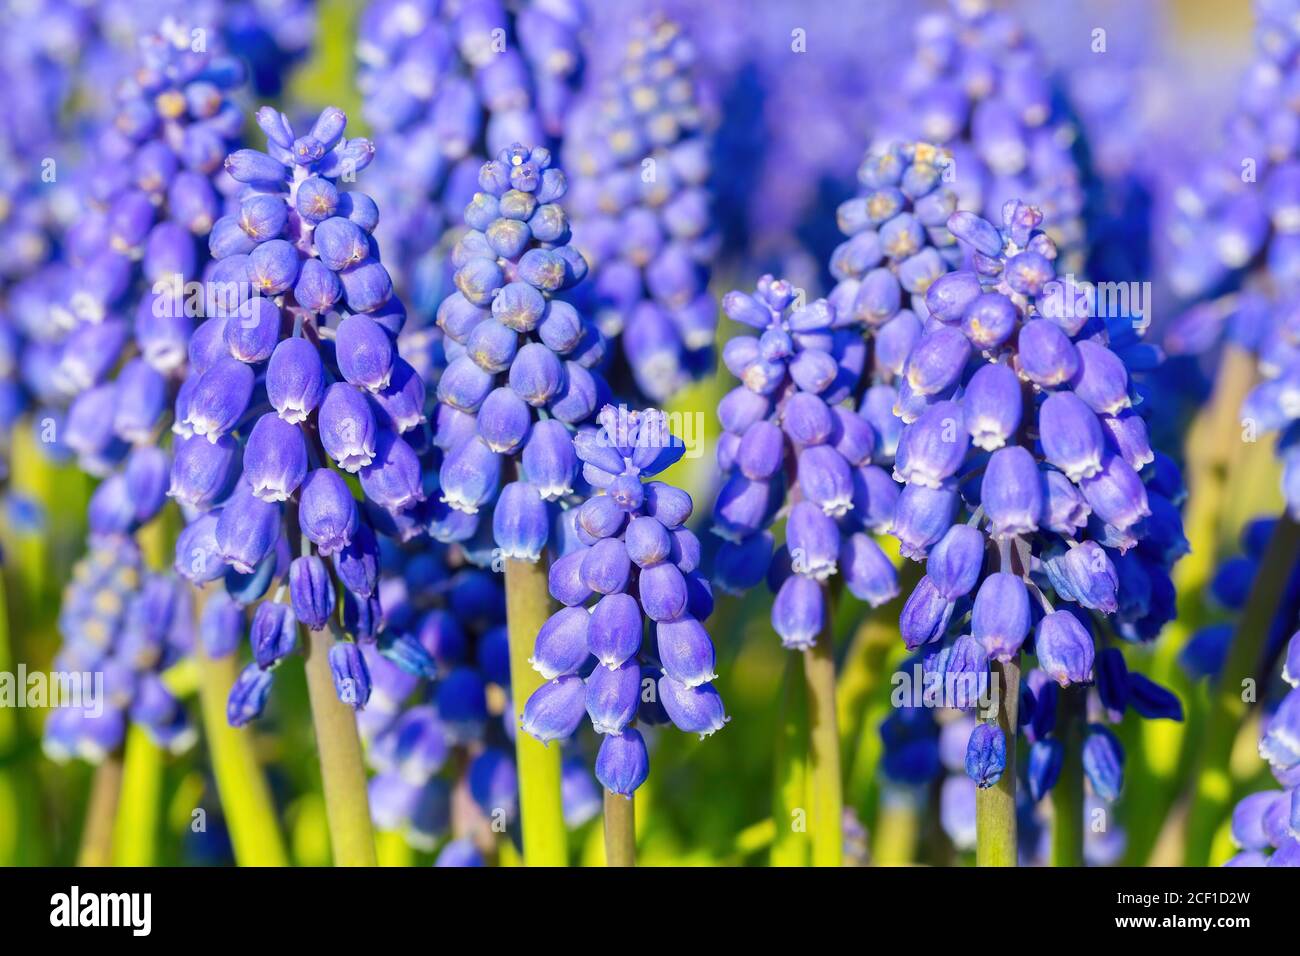 Group of blue grape hyacinths in spring season Stock Photo